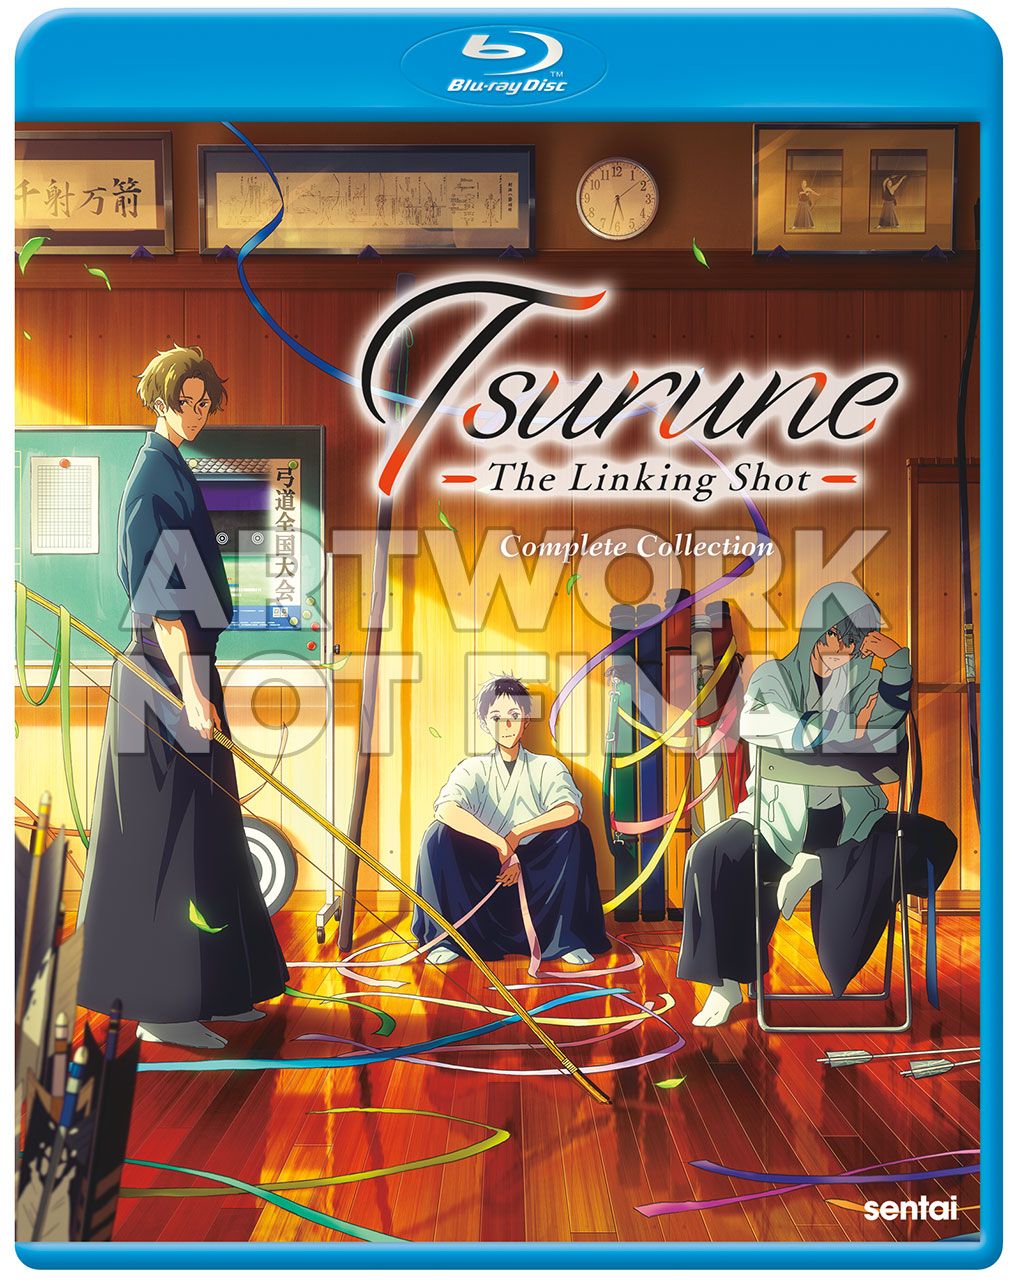 Tsurune ~ The Linking Shot Blu-ray. Cover art provided by Sentai Filmworks